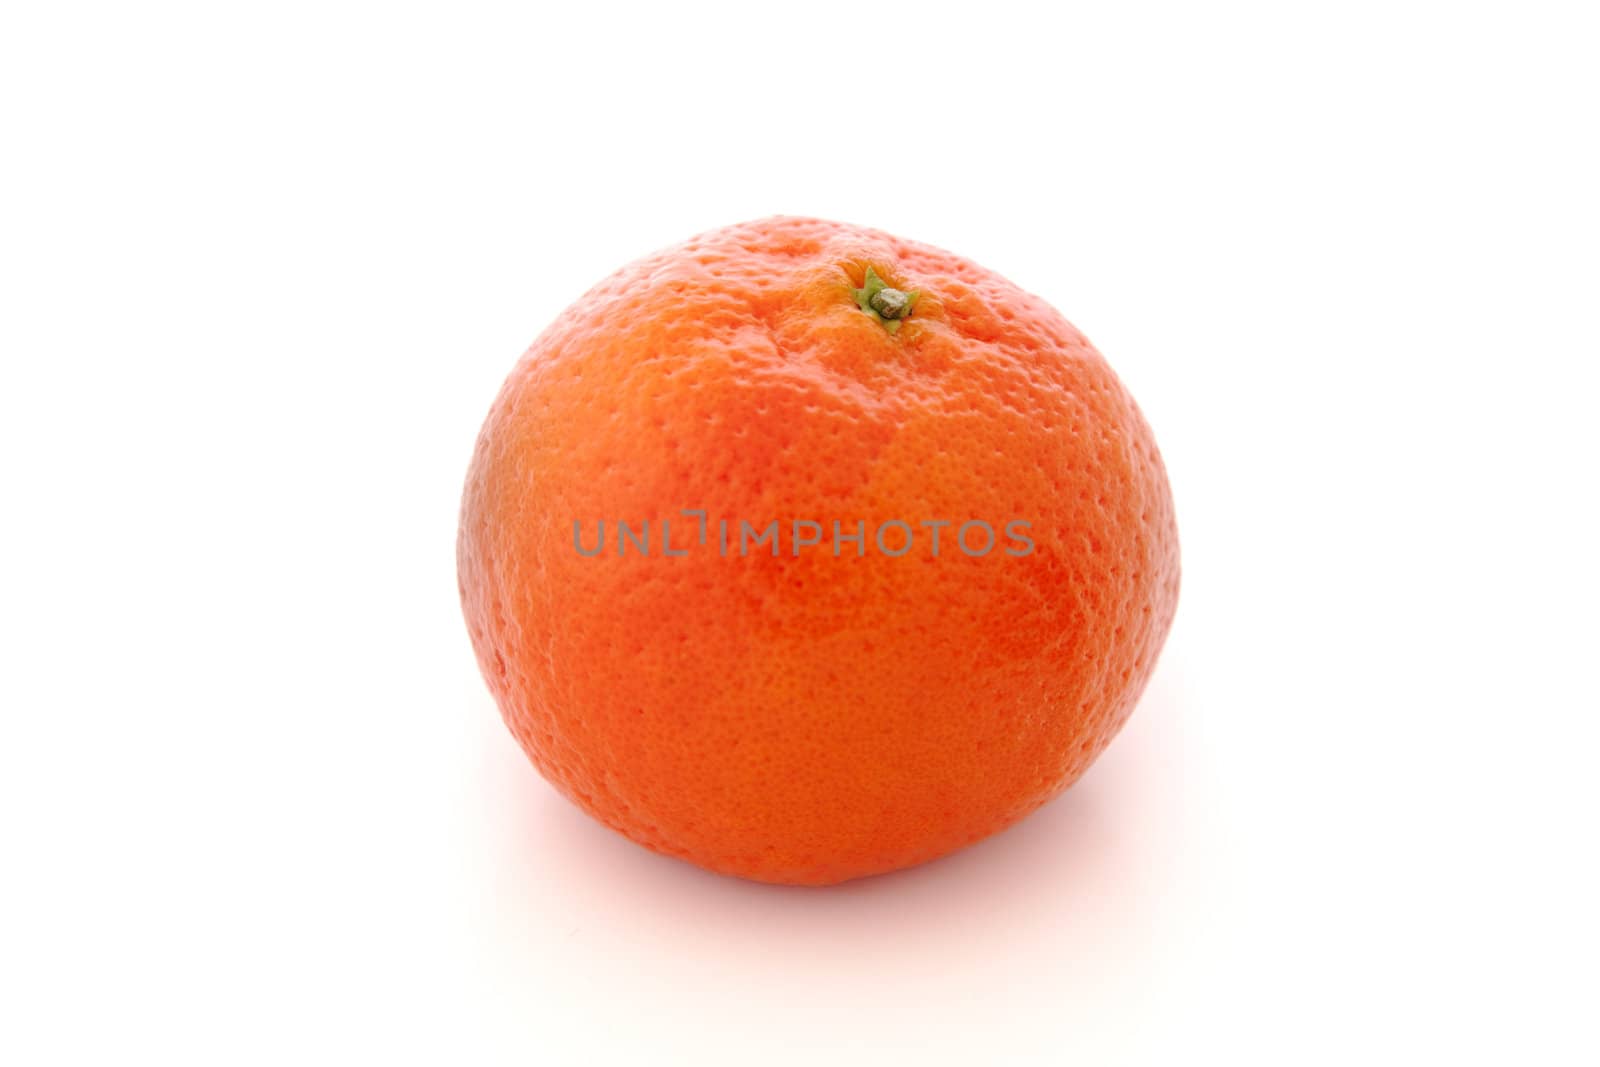 Whole ripe mandarine by monkeystock